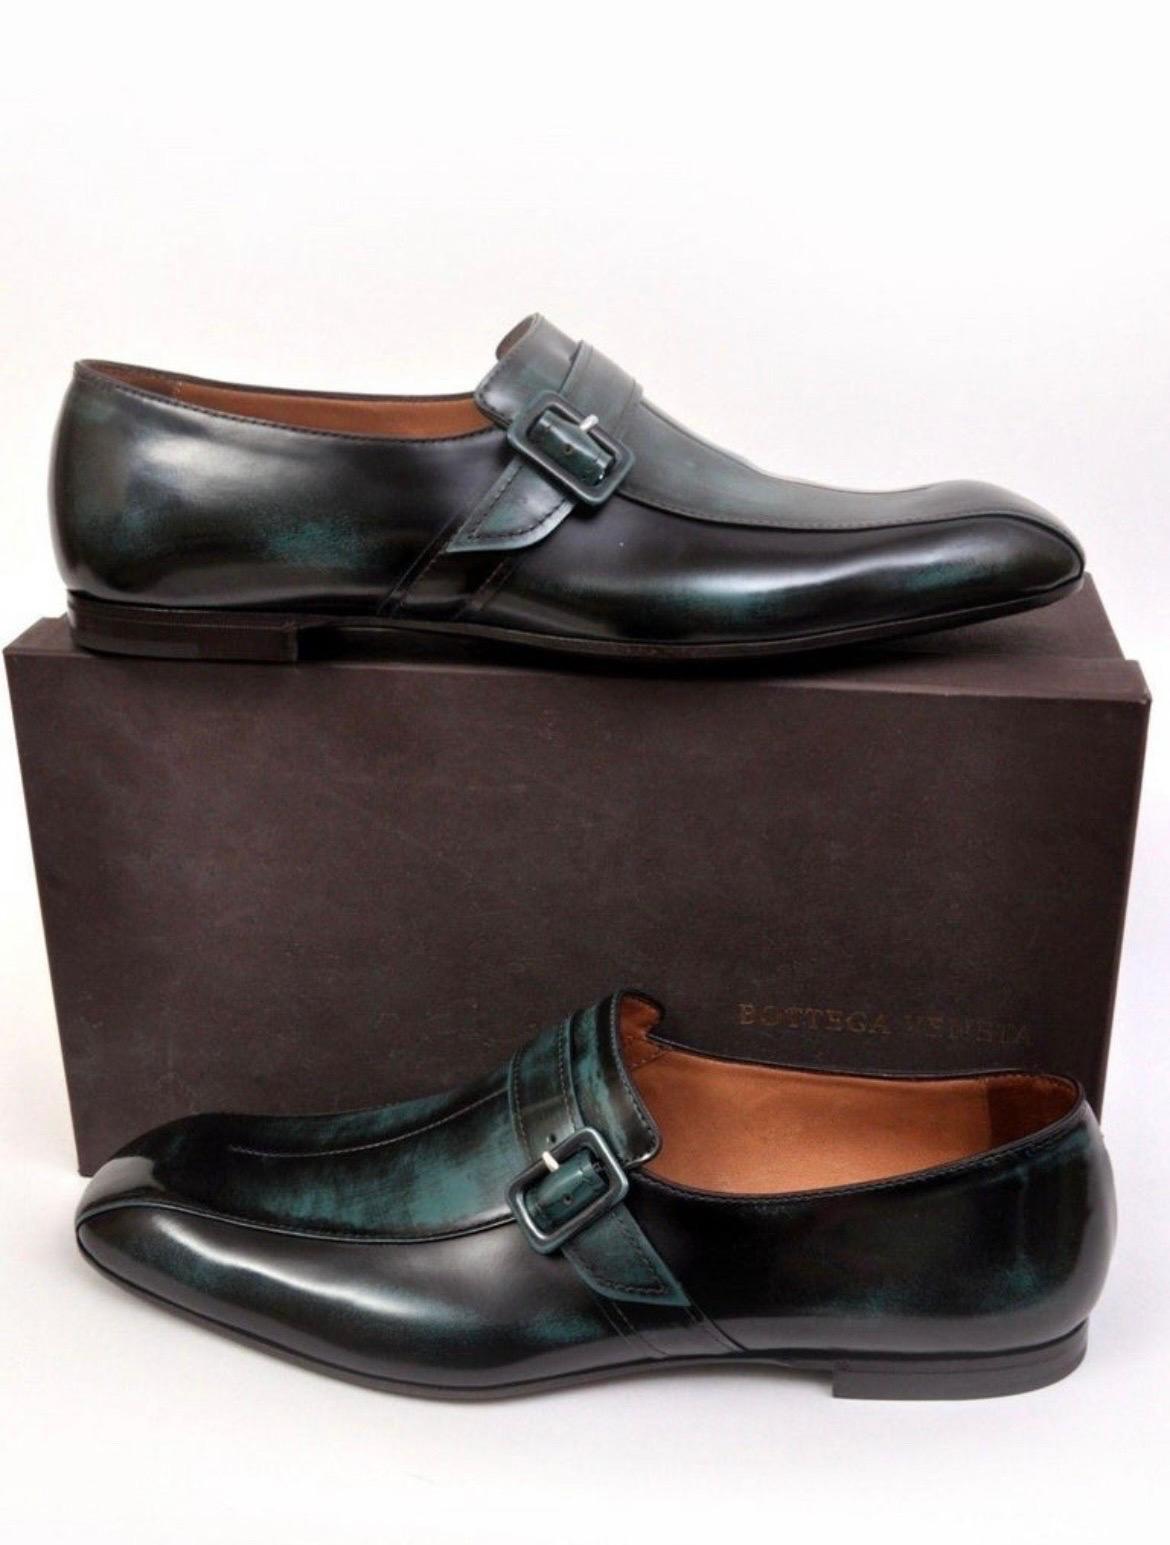 Bottega Veneta Intrecciato Woven Smoking Flat Loafer Shoes US8 EU38 Pink  Leather